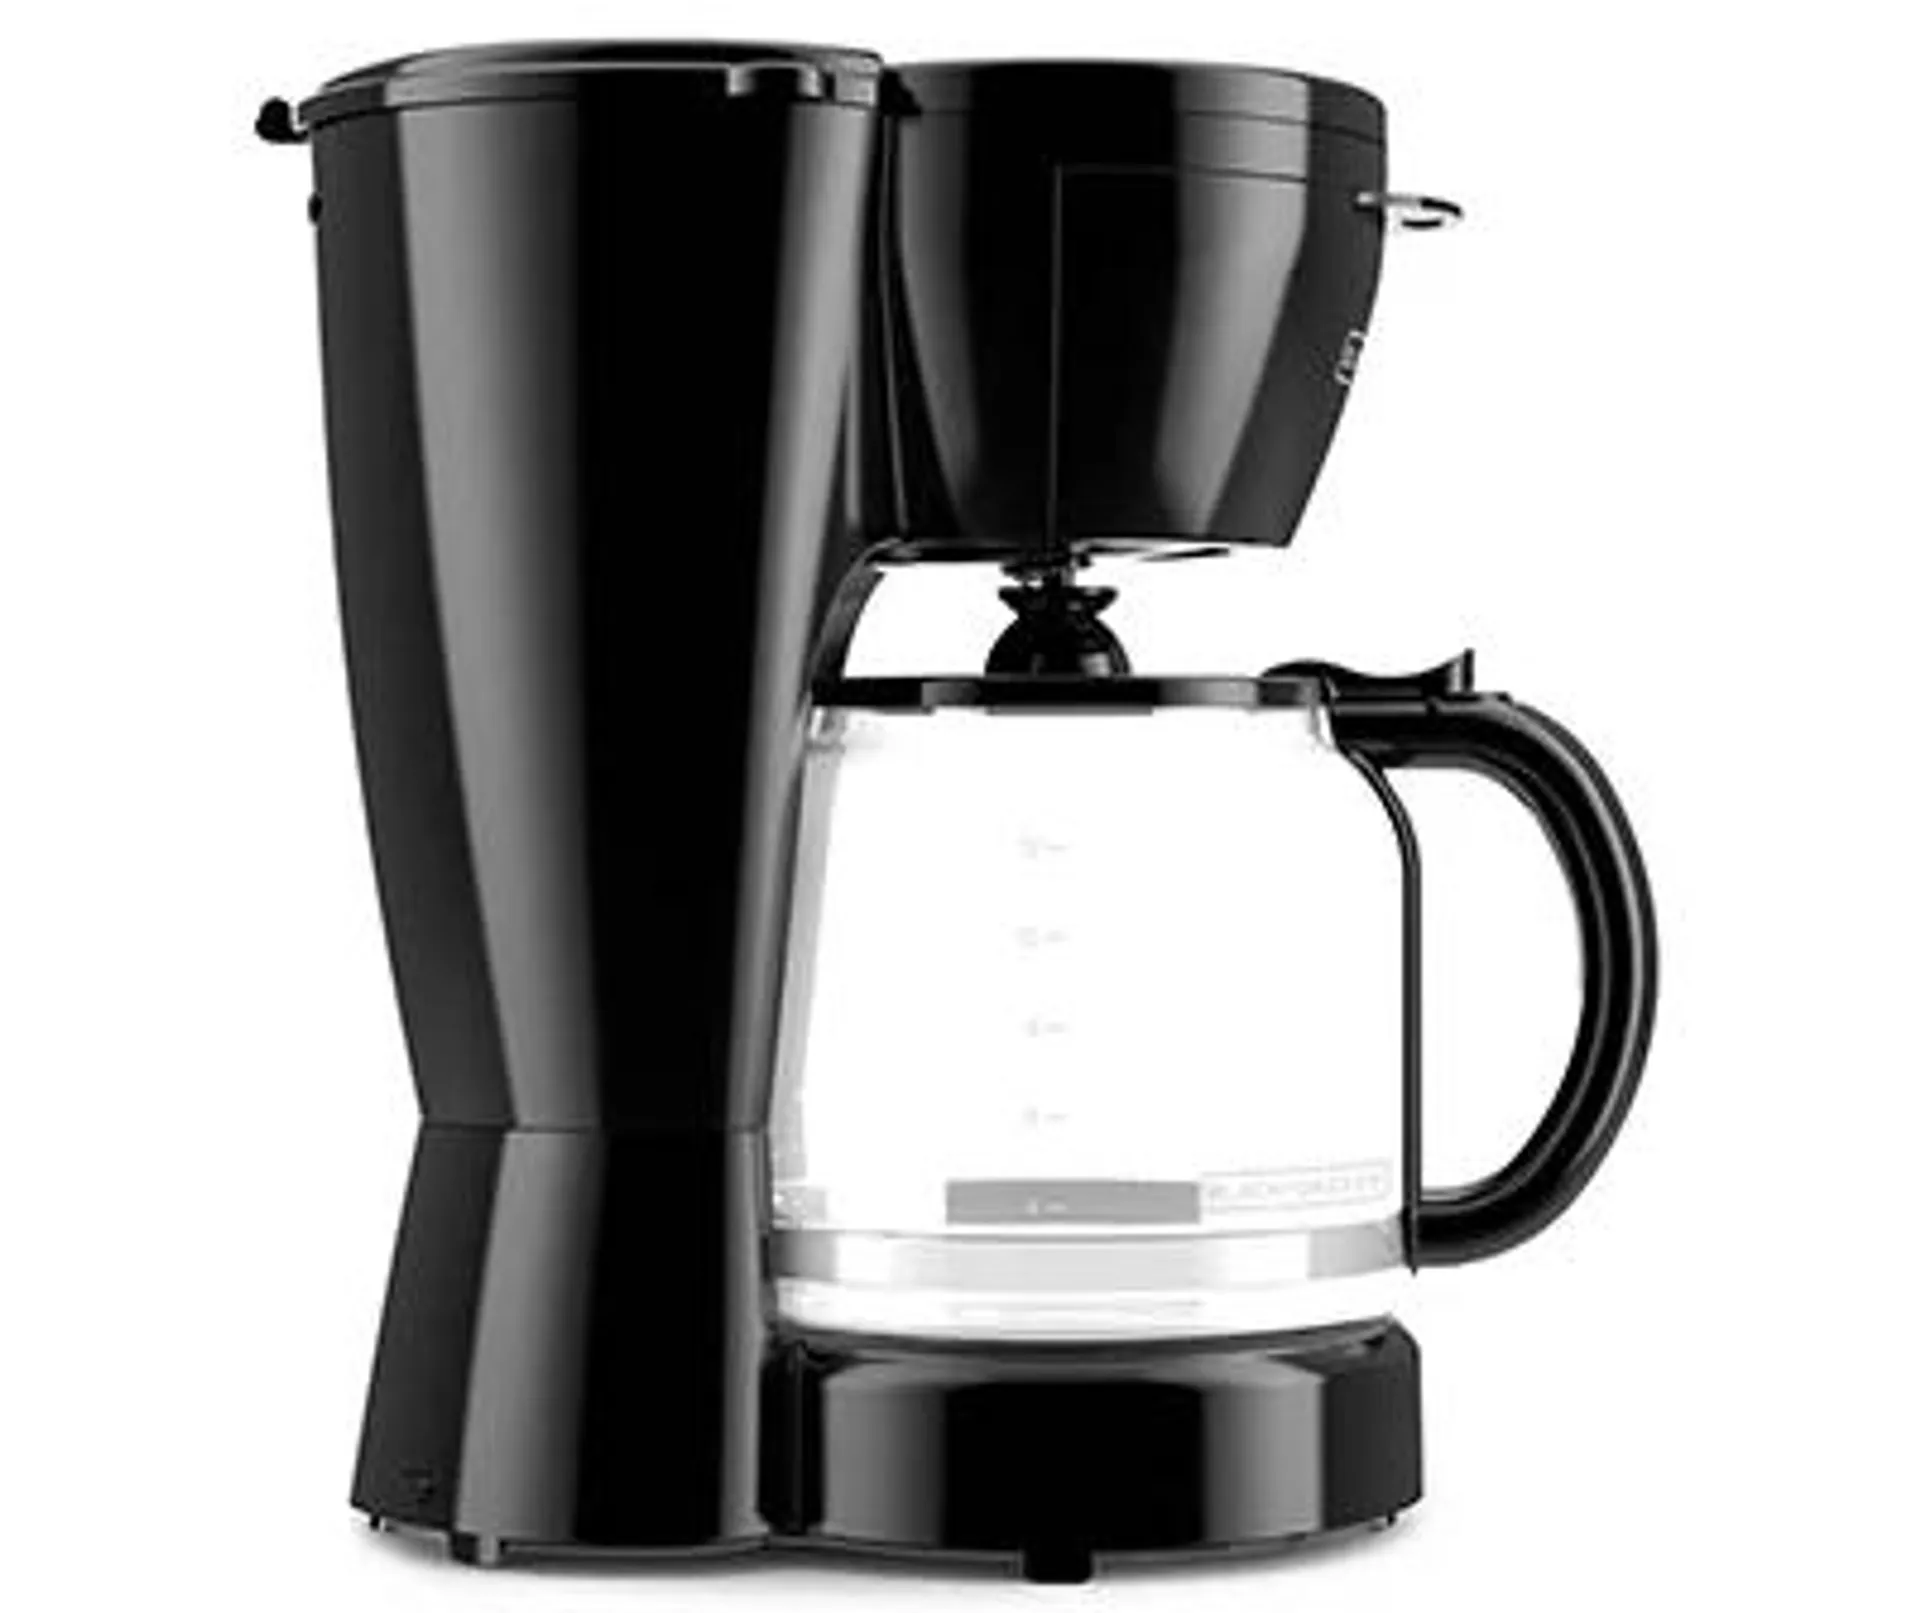 Black 12-Cup* Coffee Maker